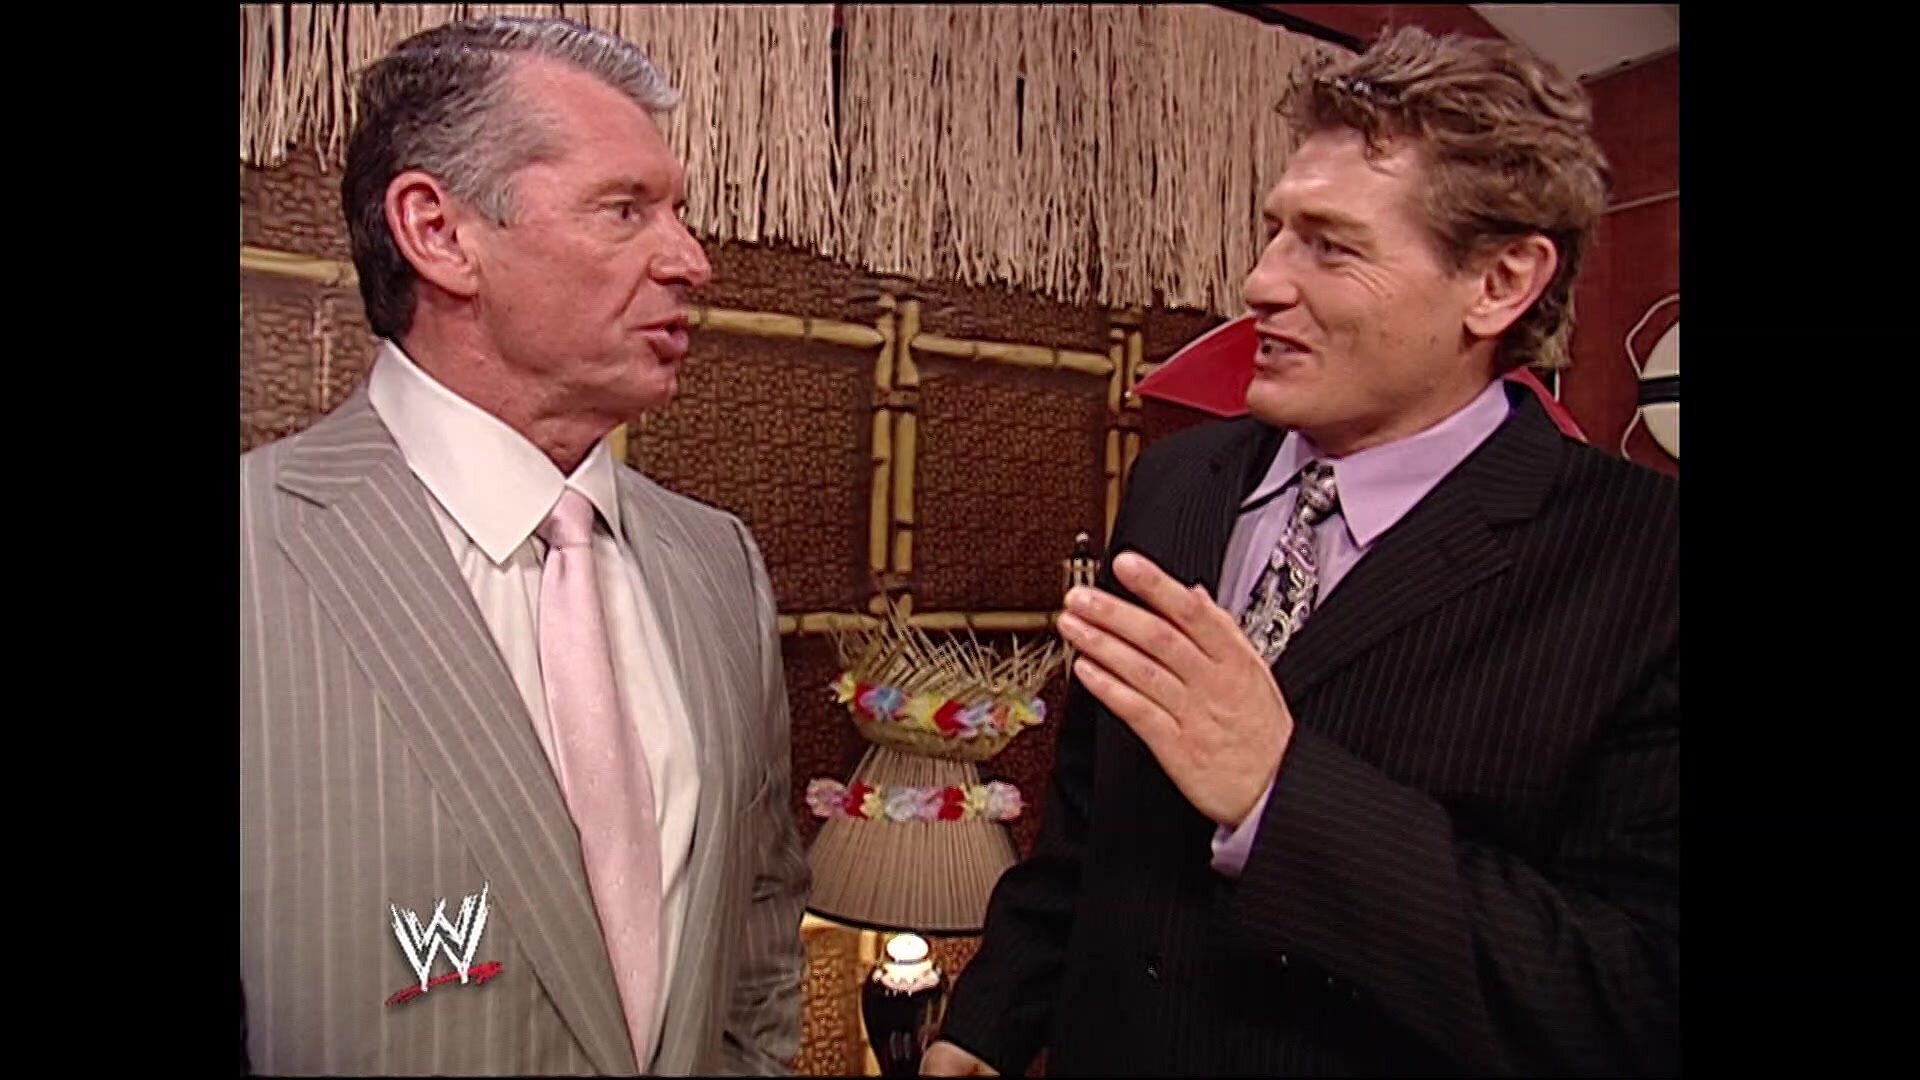 Vince McMahon and William Regal